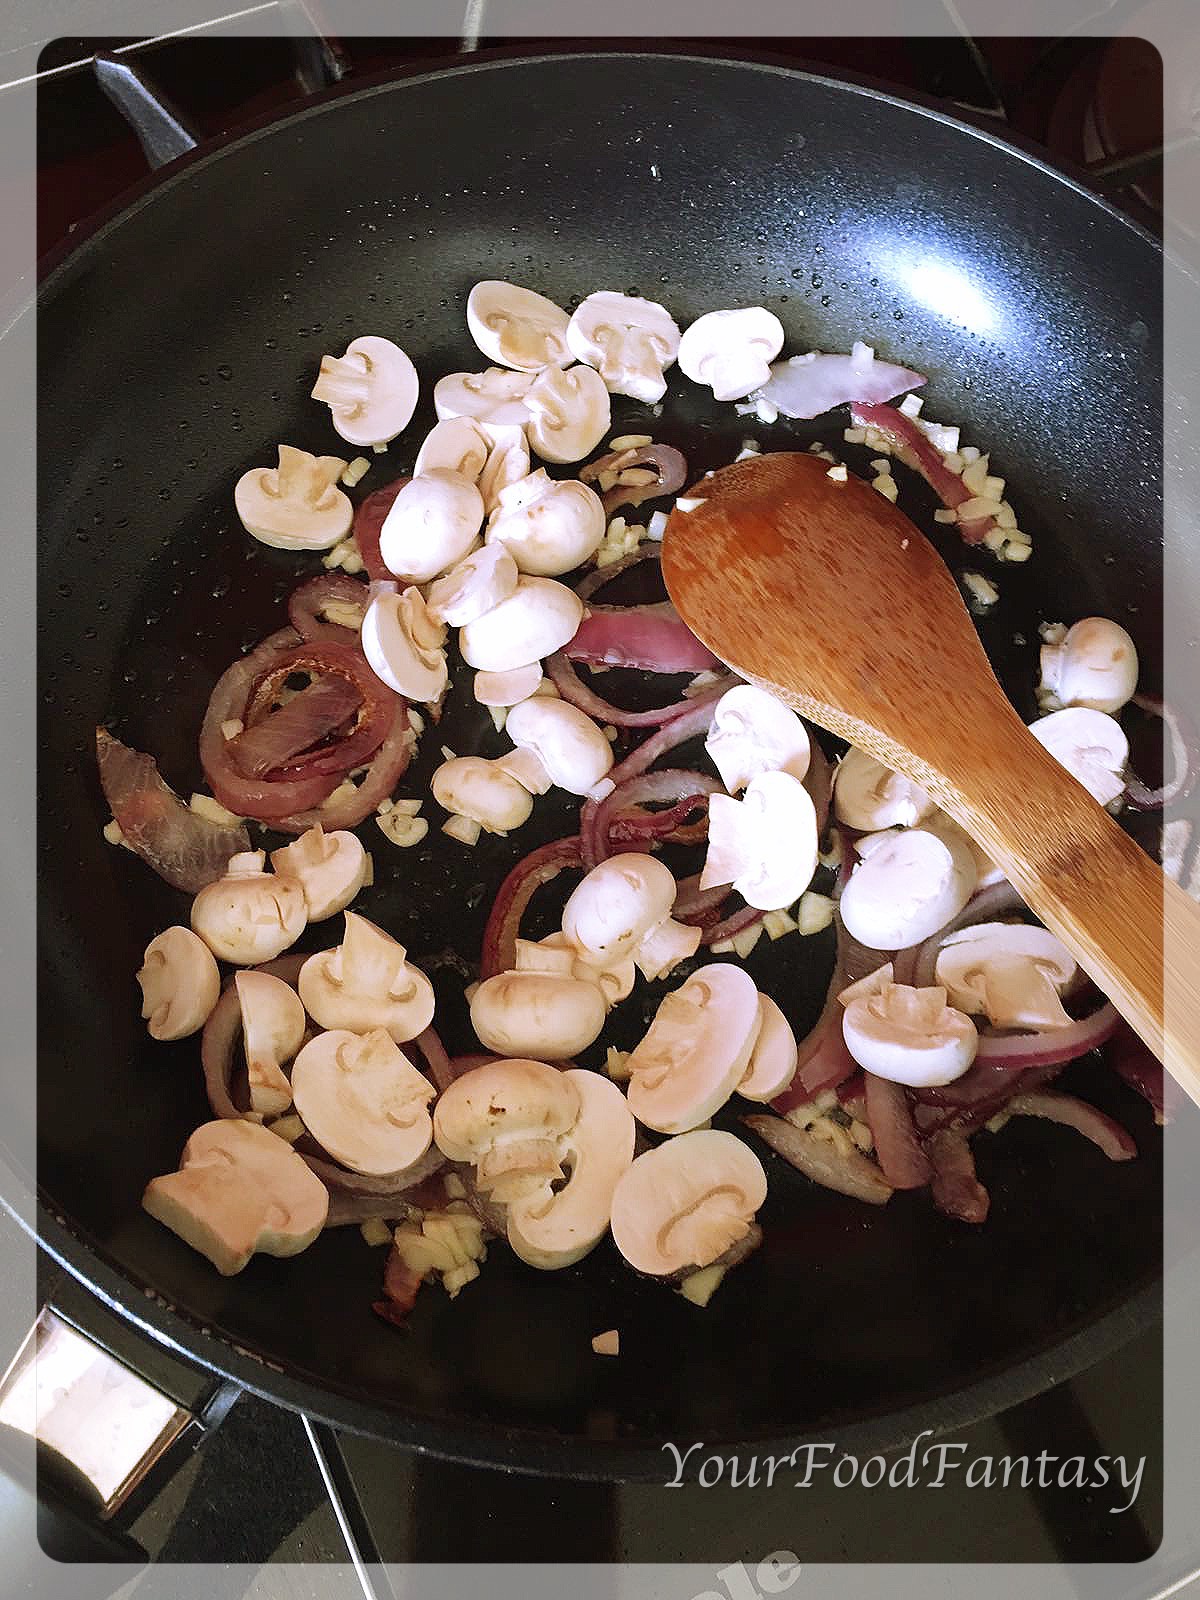 frying mushroom, garlic and onion for bruschetta con funghi at yourfoodfantasy.com by meenu gupta